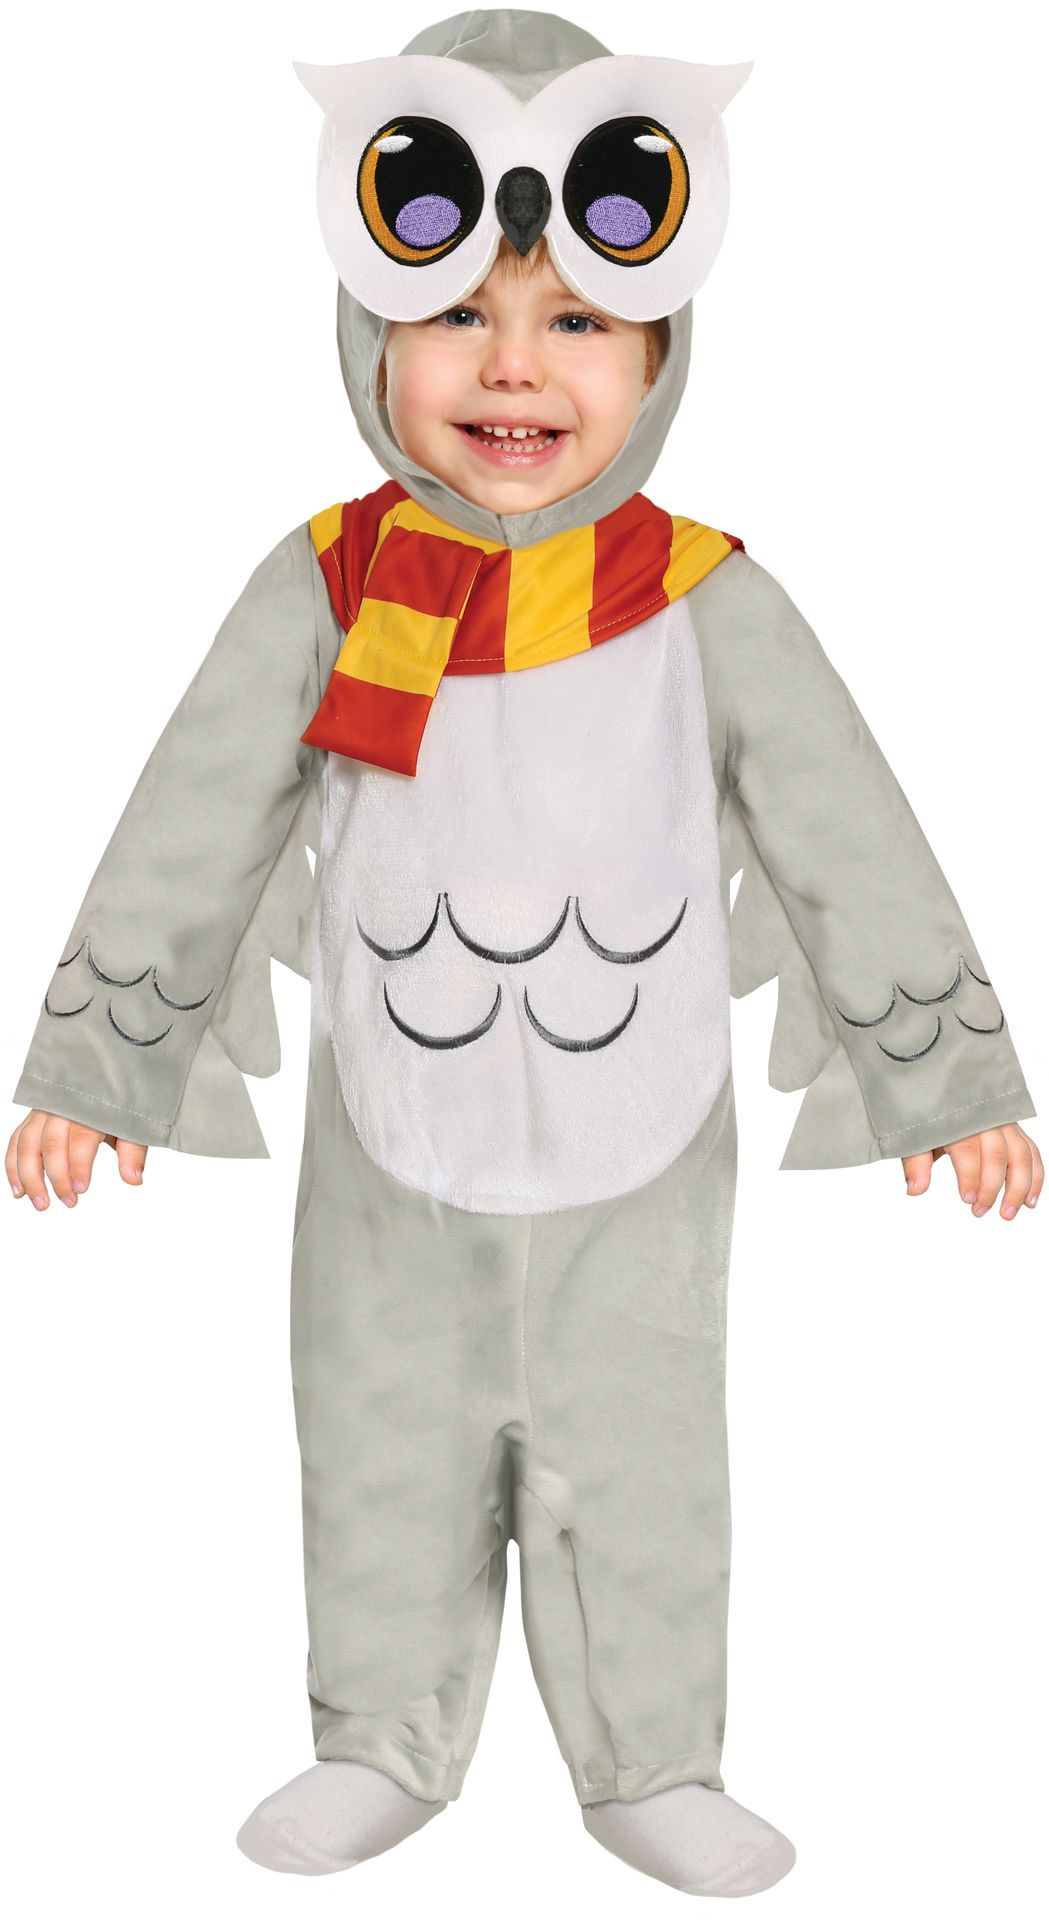 Harry Potter uil baby kostuum